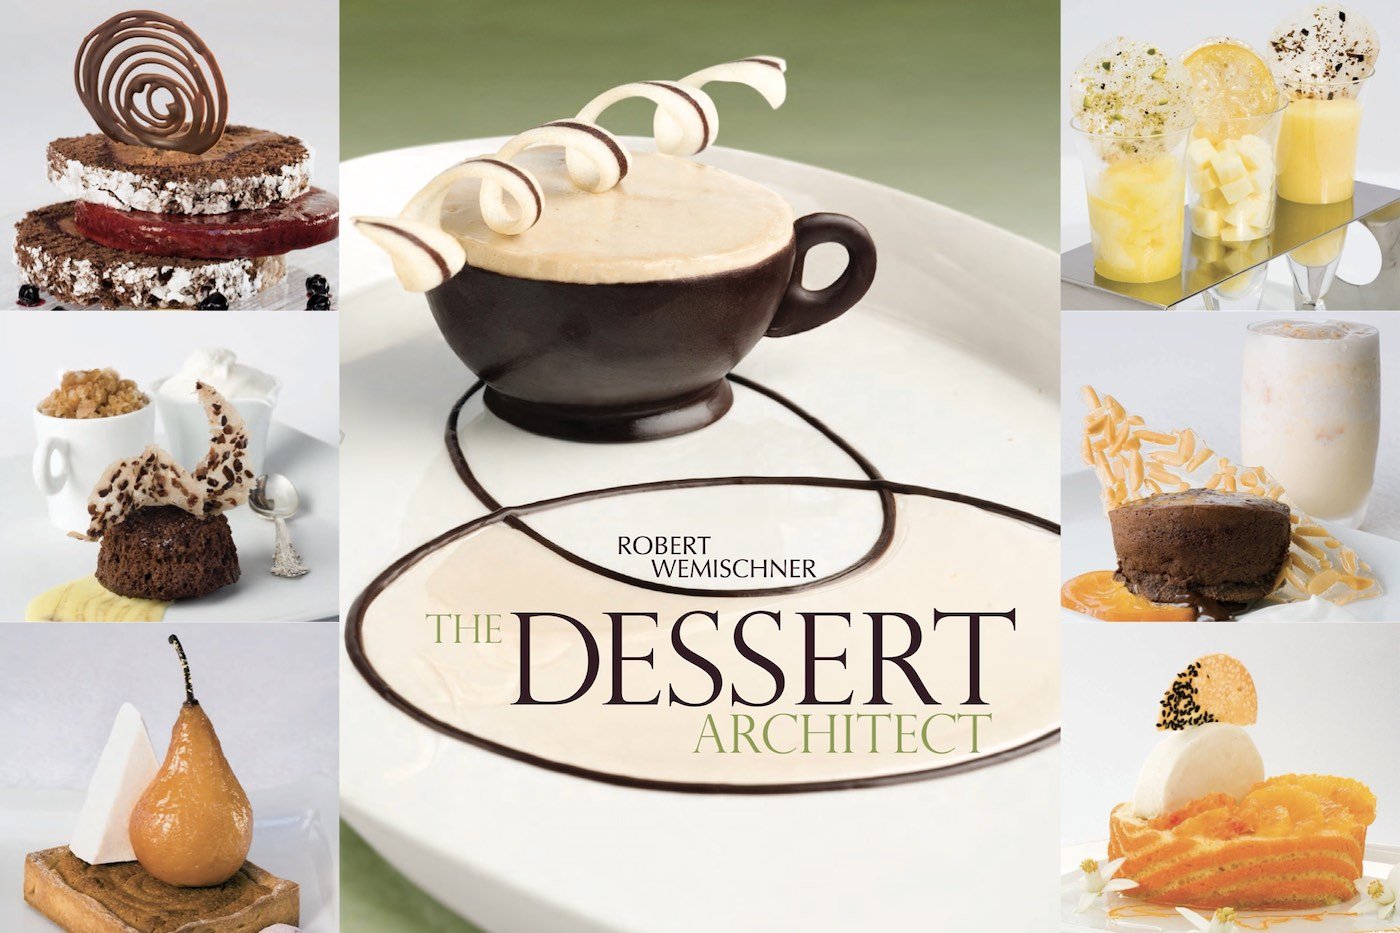 Behind The Cookbook: The Dessert Architect